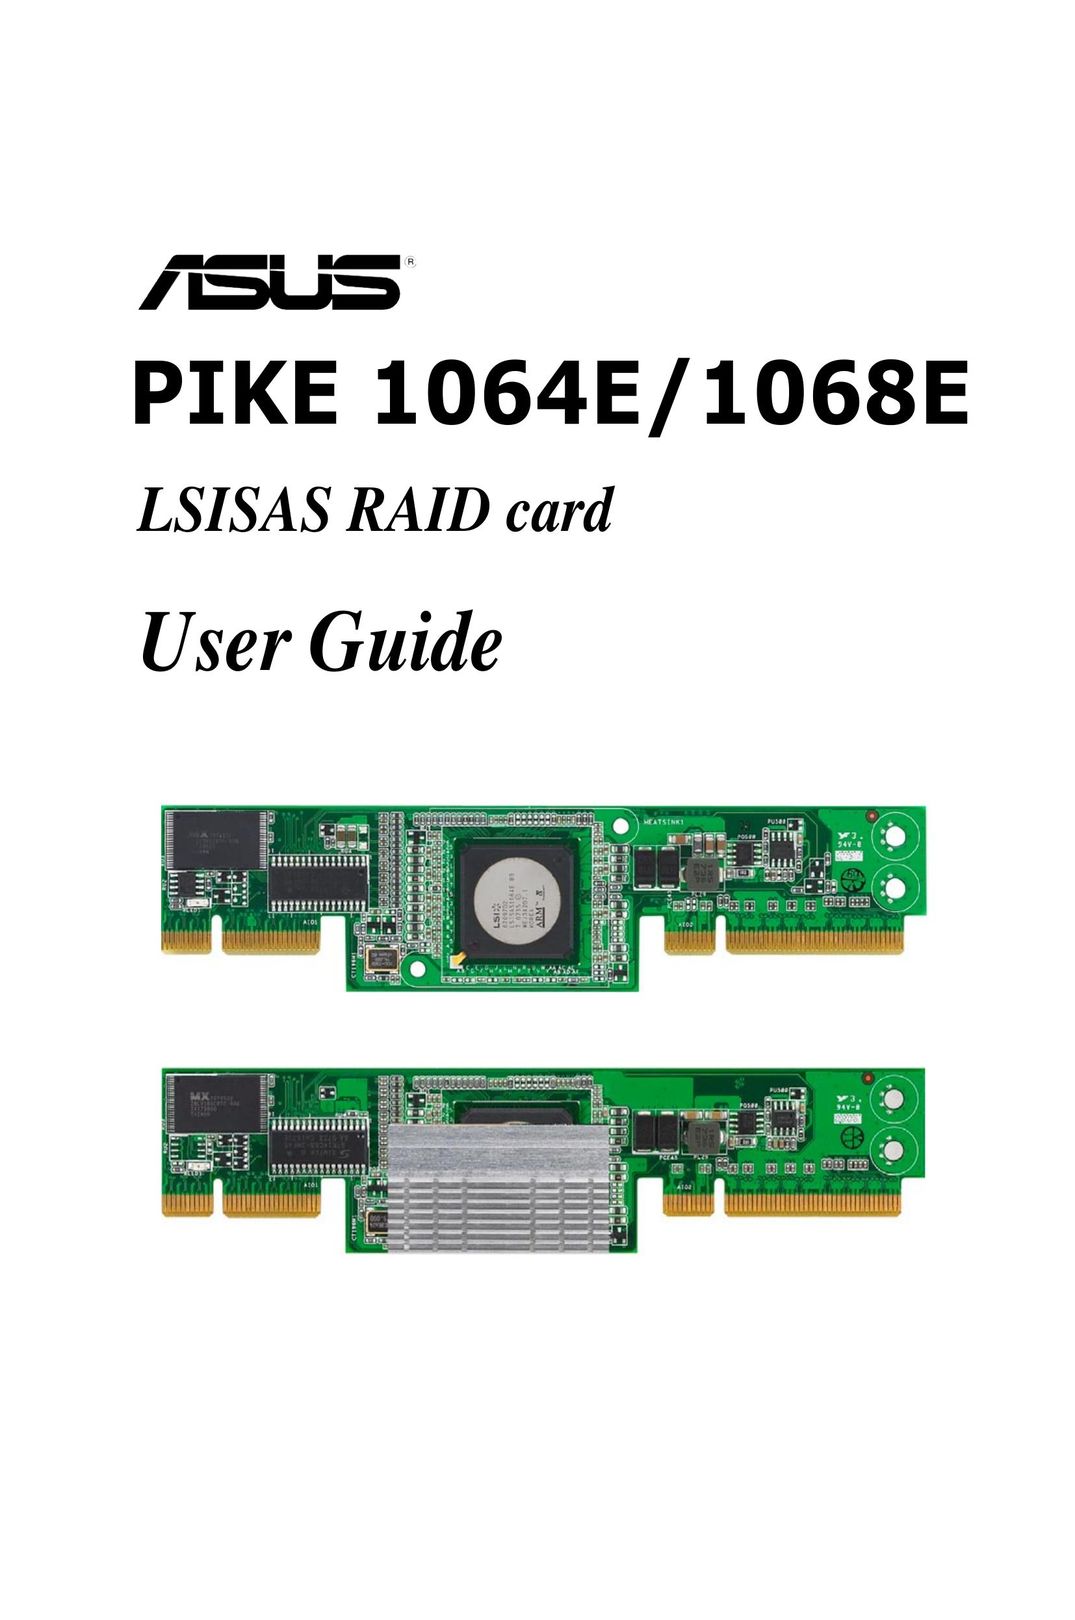 Asus PIKE 1064E Network Card User Manual